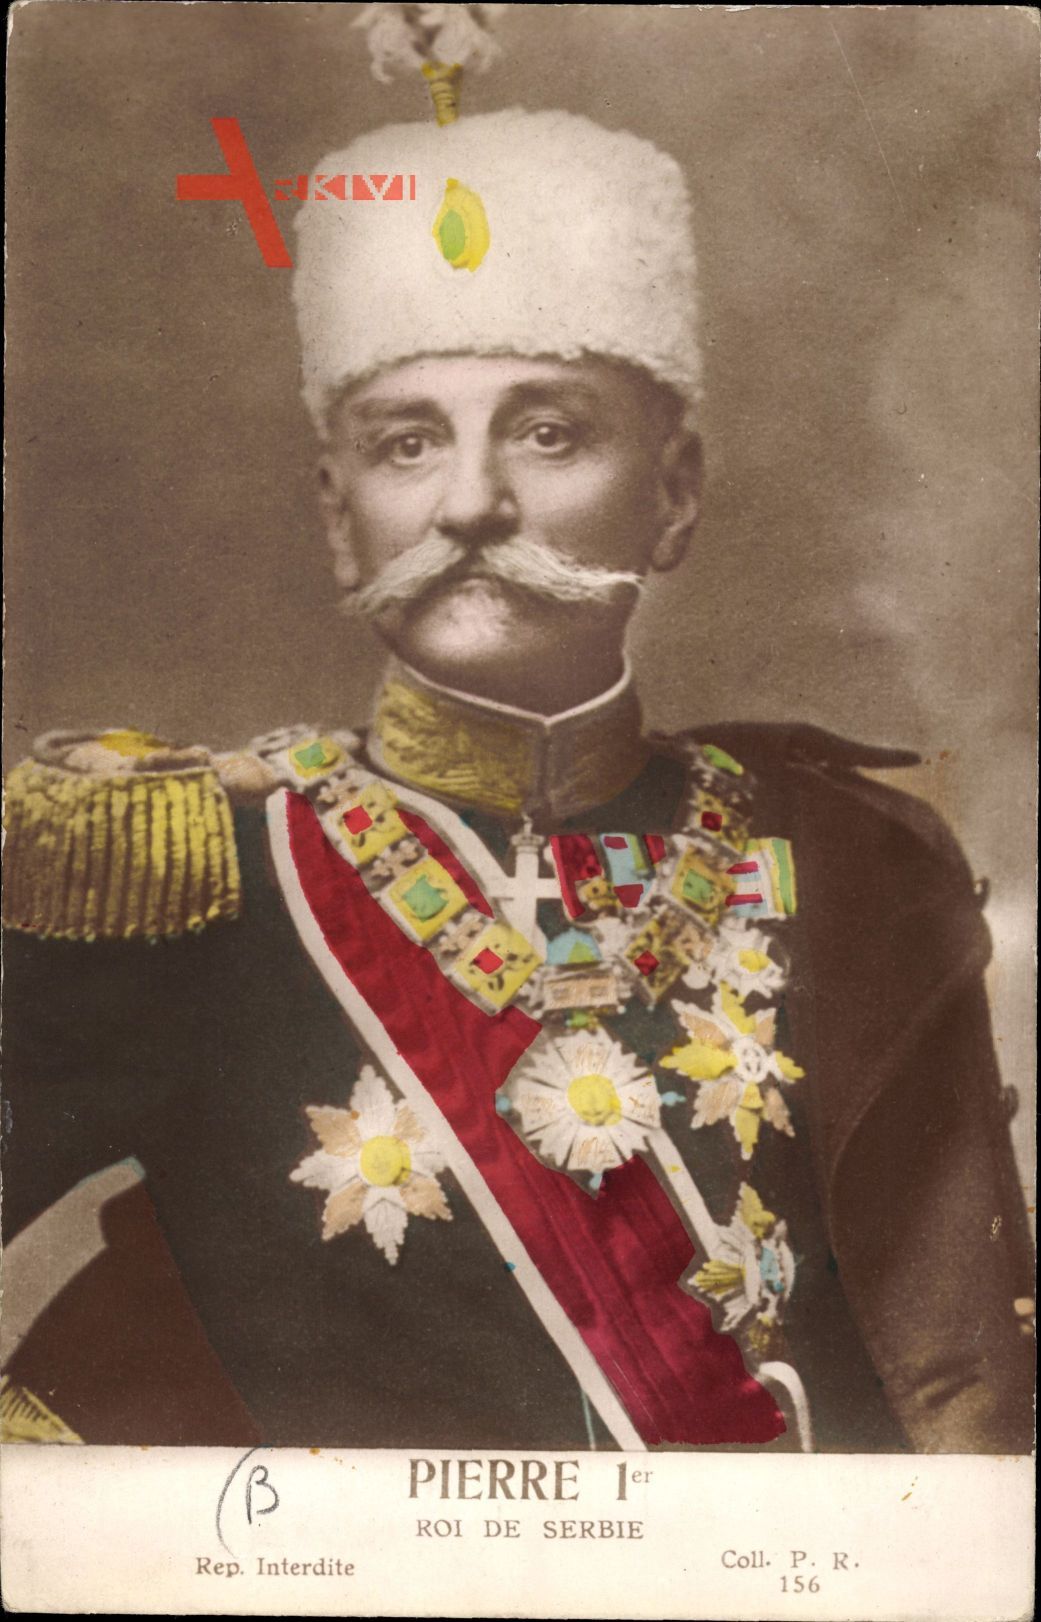 König Peter I. Karadjordjevic von Jugoslawien, Serbien, Portrait, Hut,Uniform